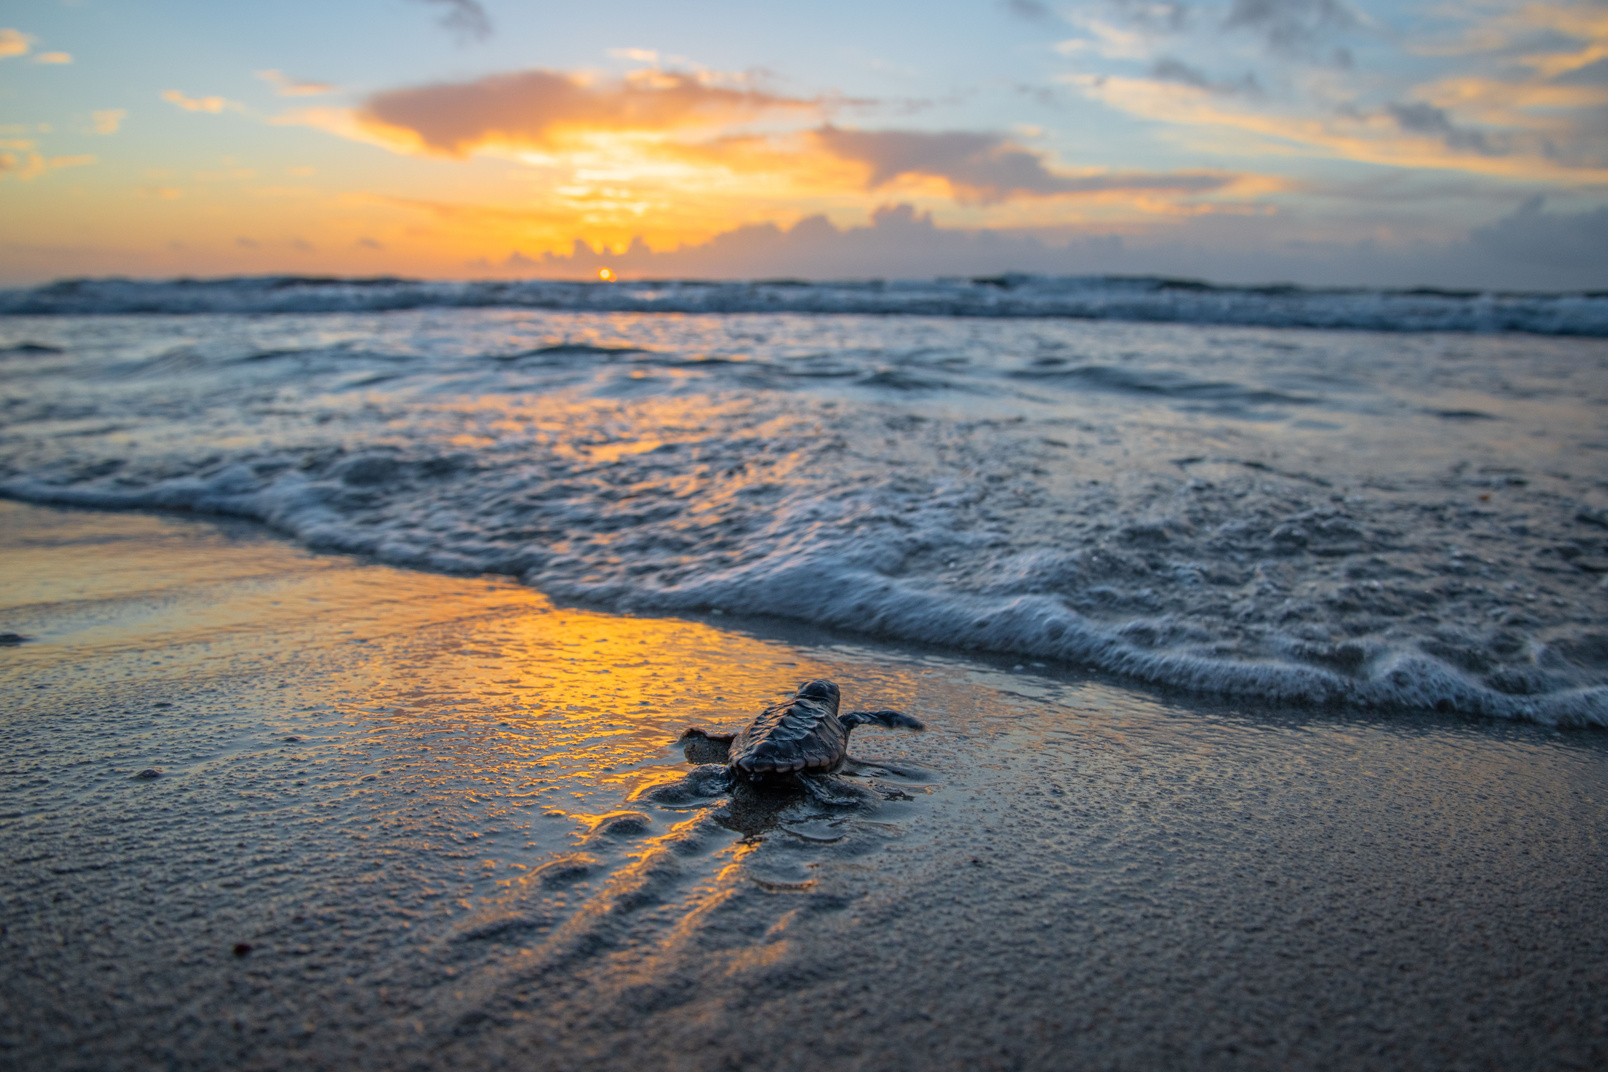 Sea turtle hatchling in Florida.